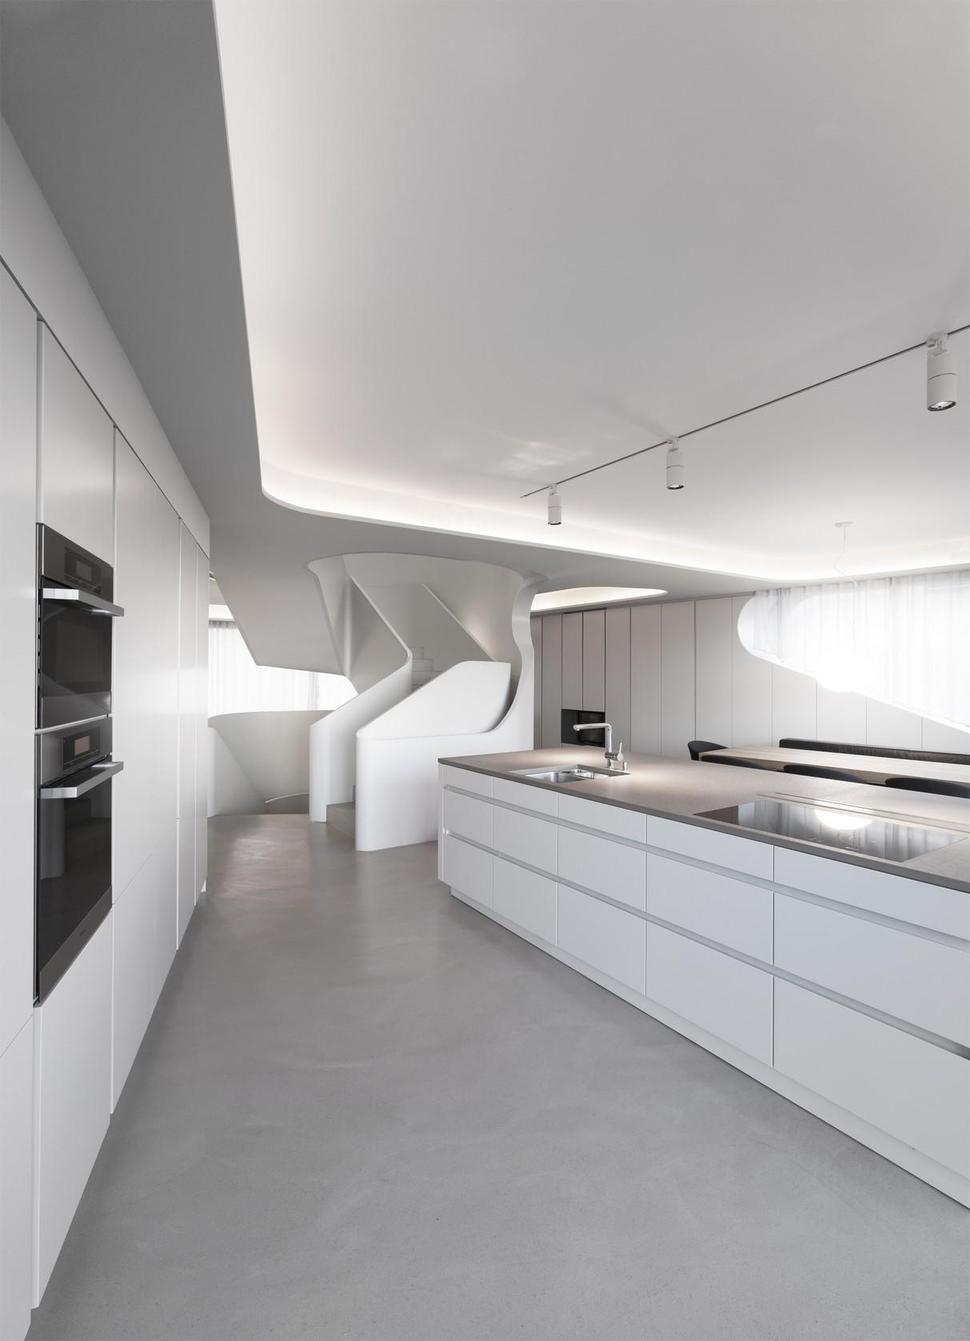 reinforced-concrete-house-with-aluminum-facade-16-far-end-kitchen.jpg